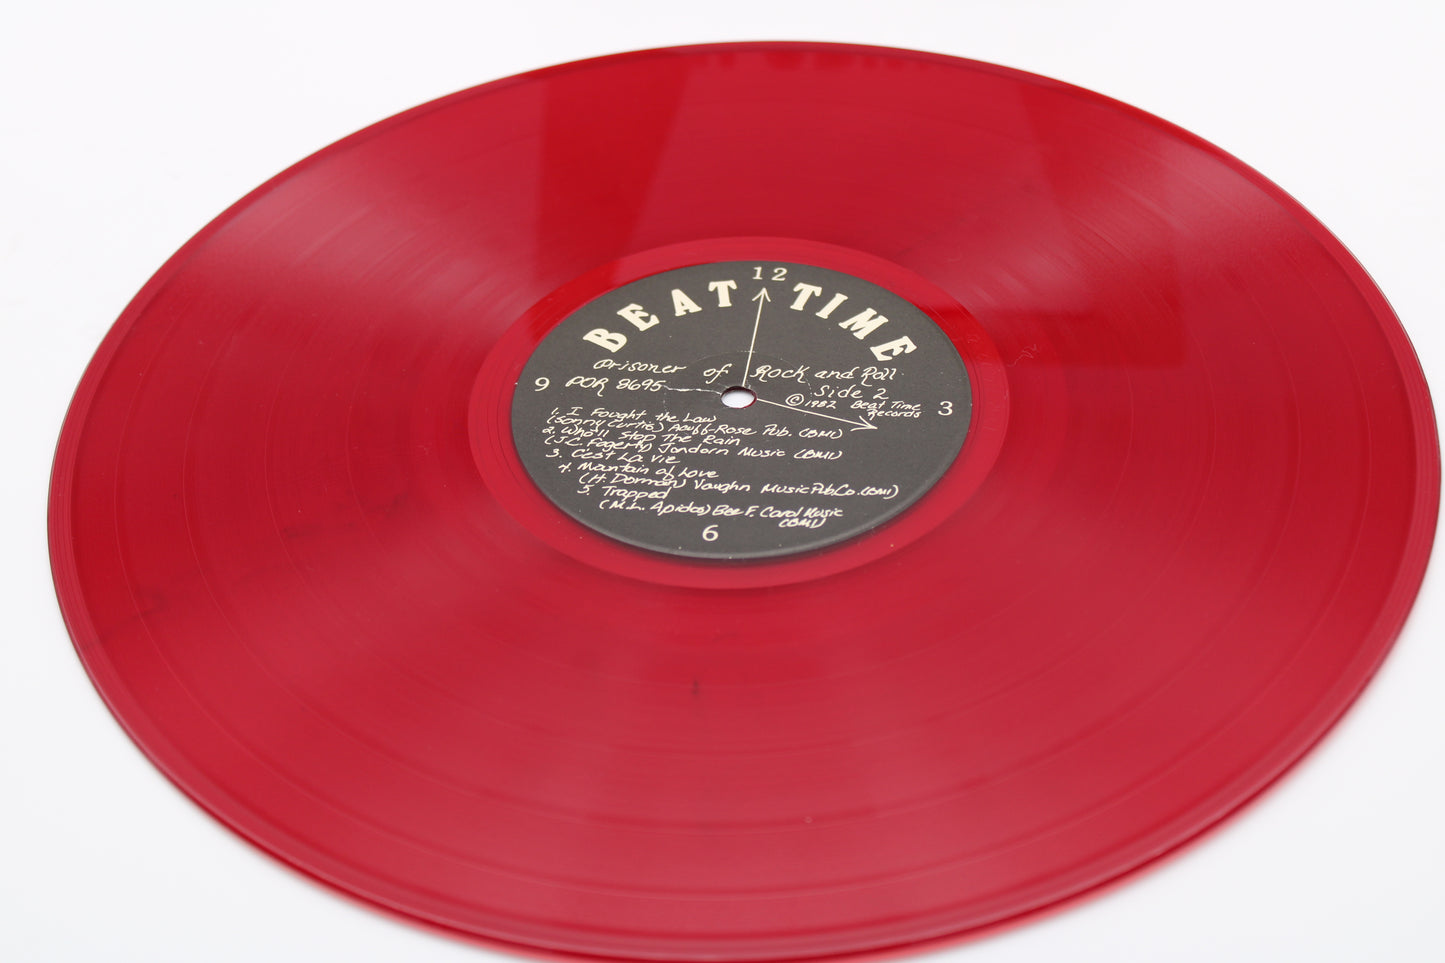 Bruce Springsteen - Prisoner of Rock 'n Roll - Unofficial Red Vinyl - Near Mint BLV